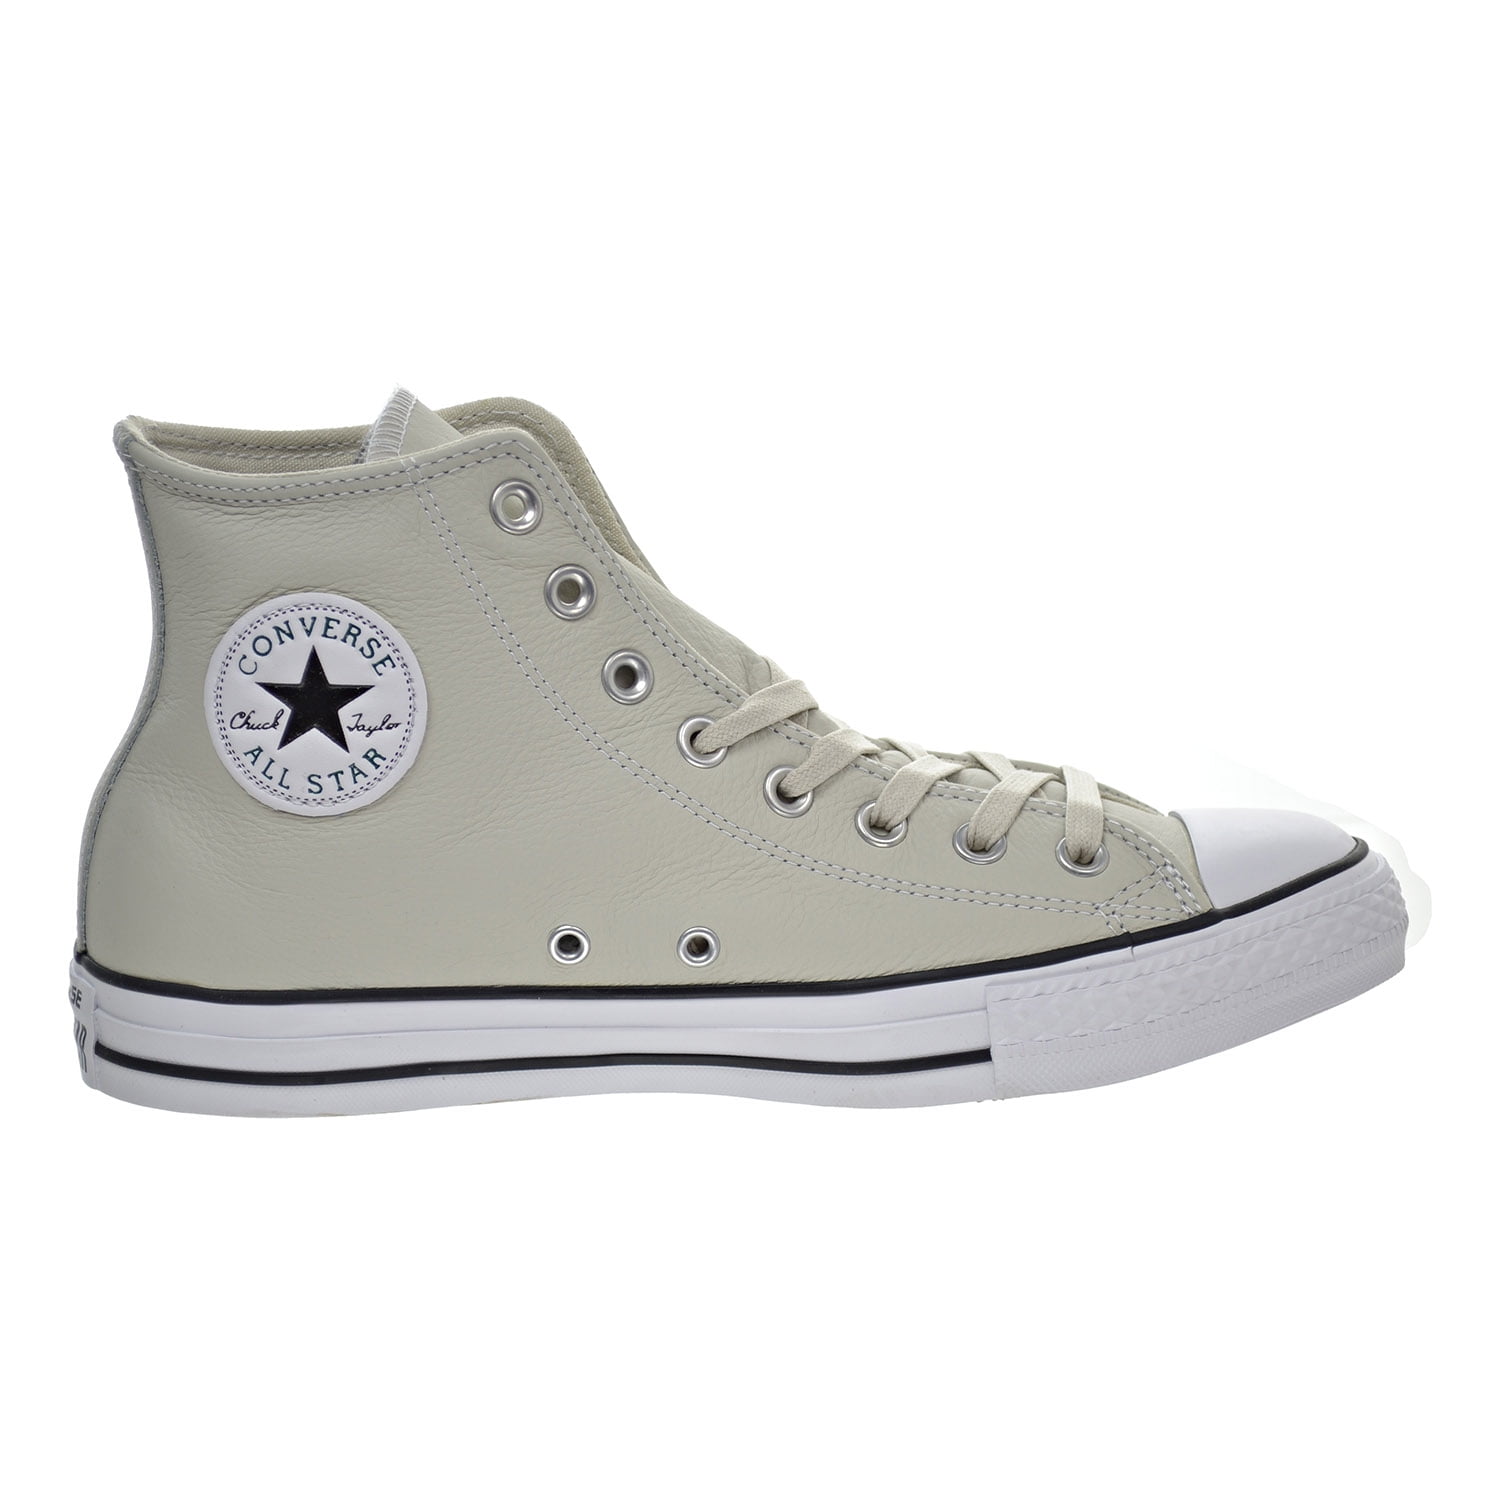 Converse Chuck Taylor All Star High Unisex Shoes Buff/Shadow Teal/White - Walmart.com